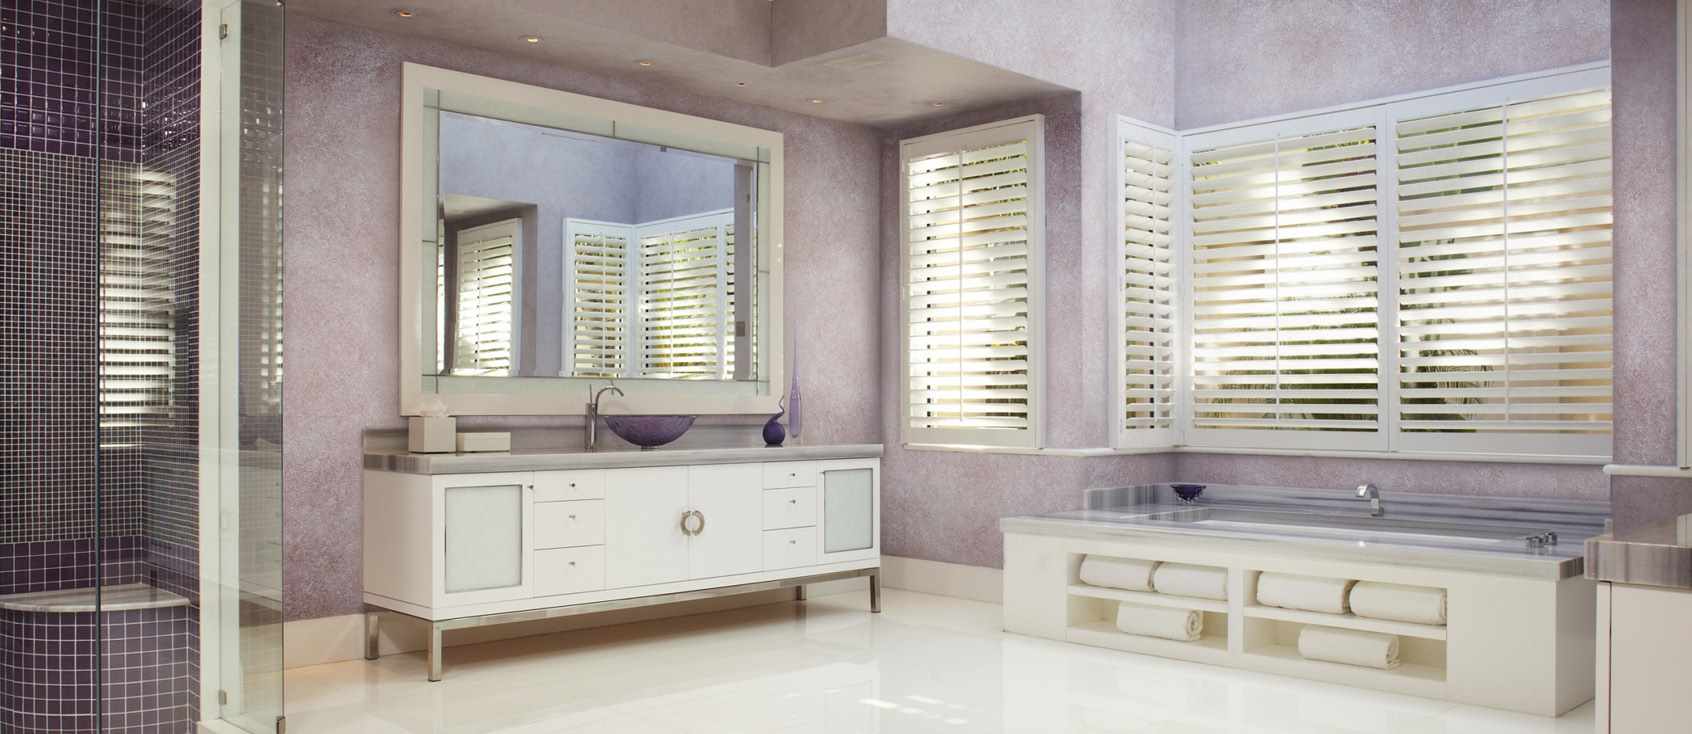 the idea of ​​using unusual decorative plaster in the interior of the bathroom